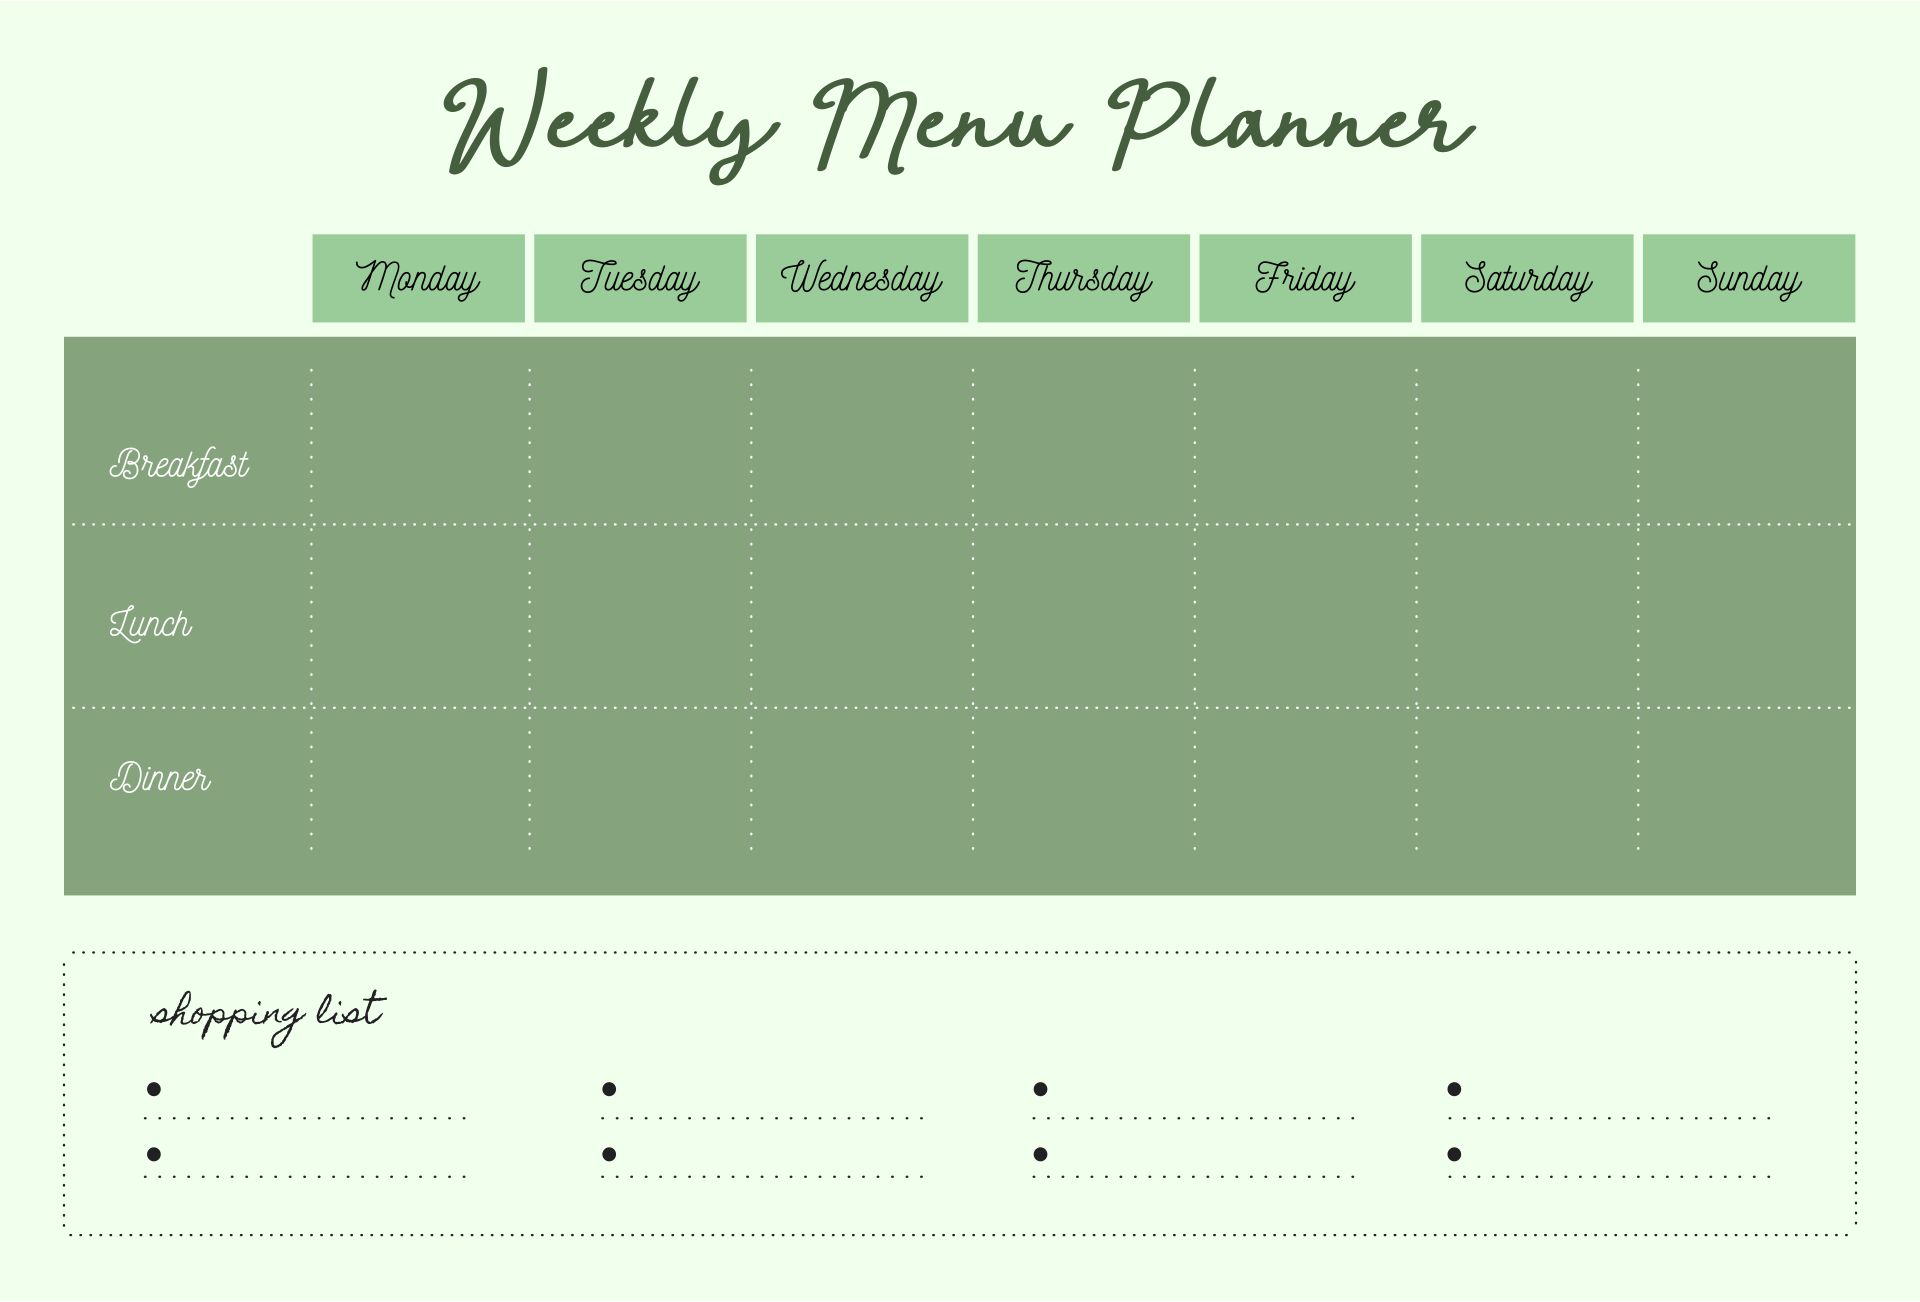 Menu Planning Calendar Template from www.printablee.com